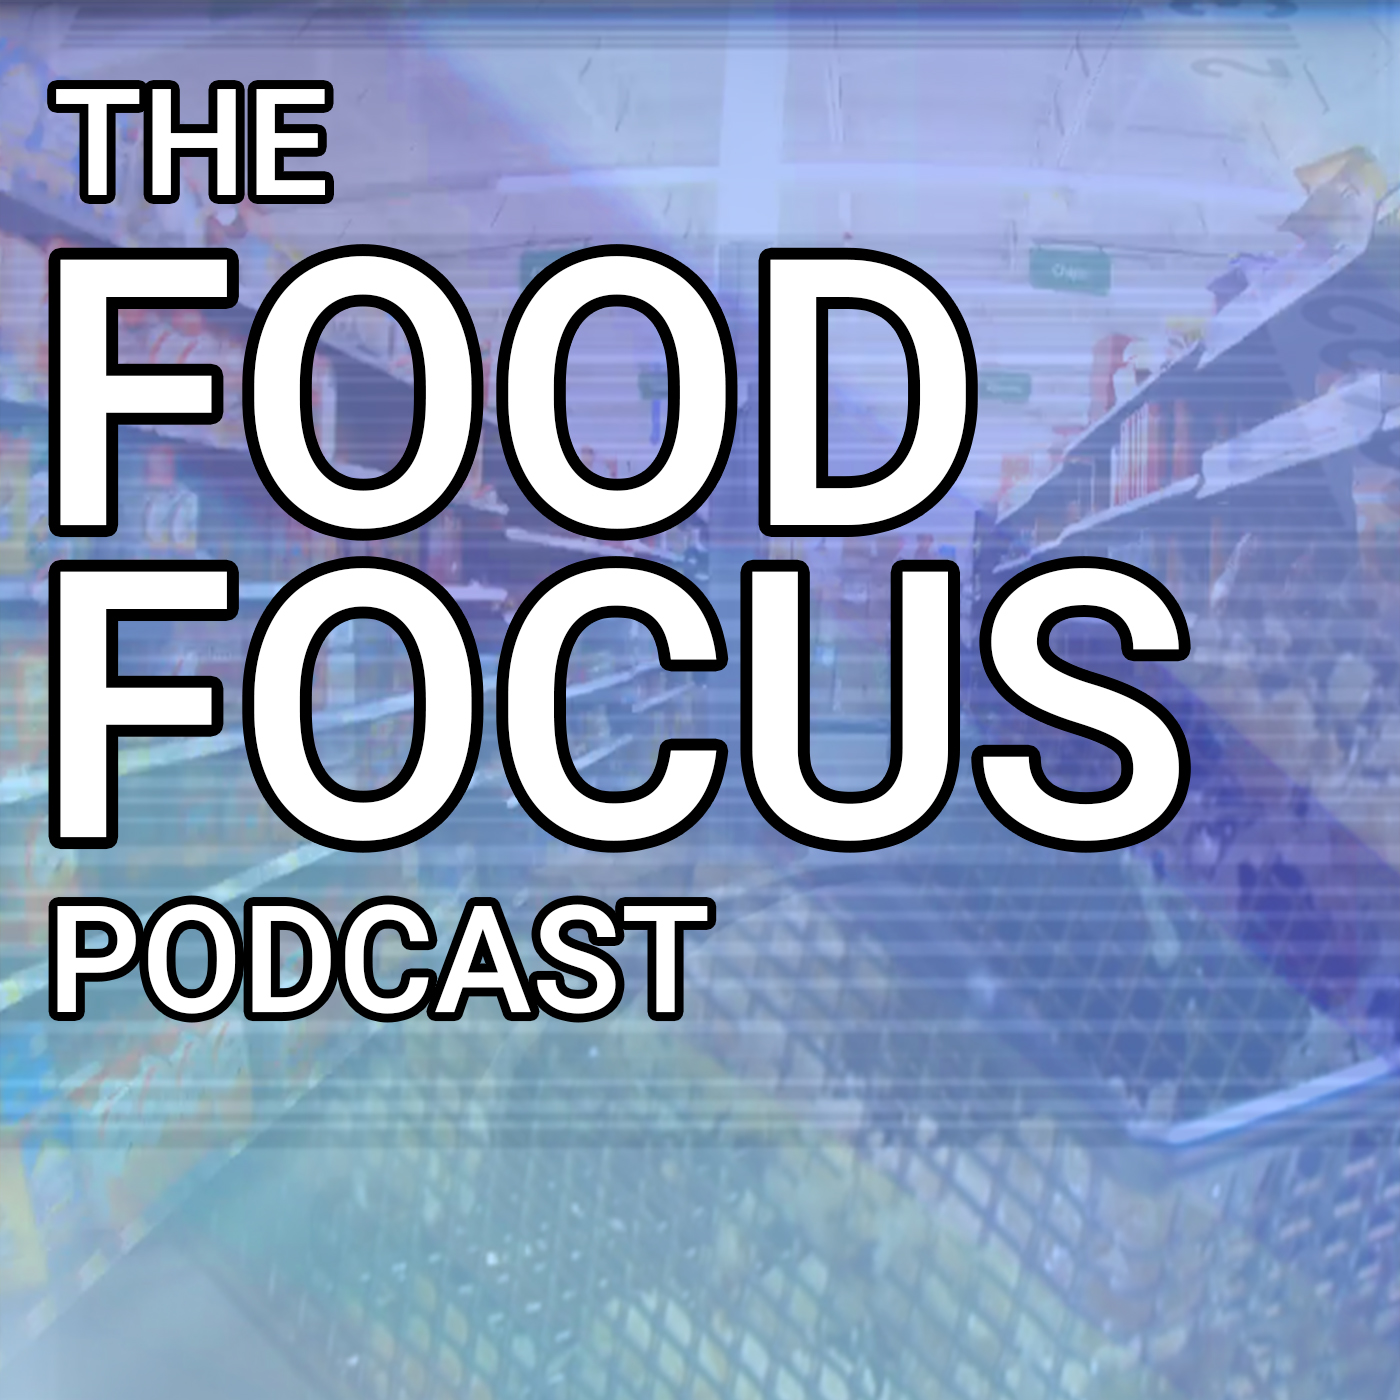 Food Focus 6/29/17 – Darden Beats Expectations Again, Moe’s & Kellogg’s Collaborate